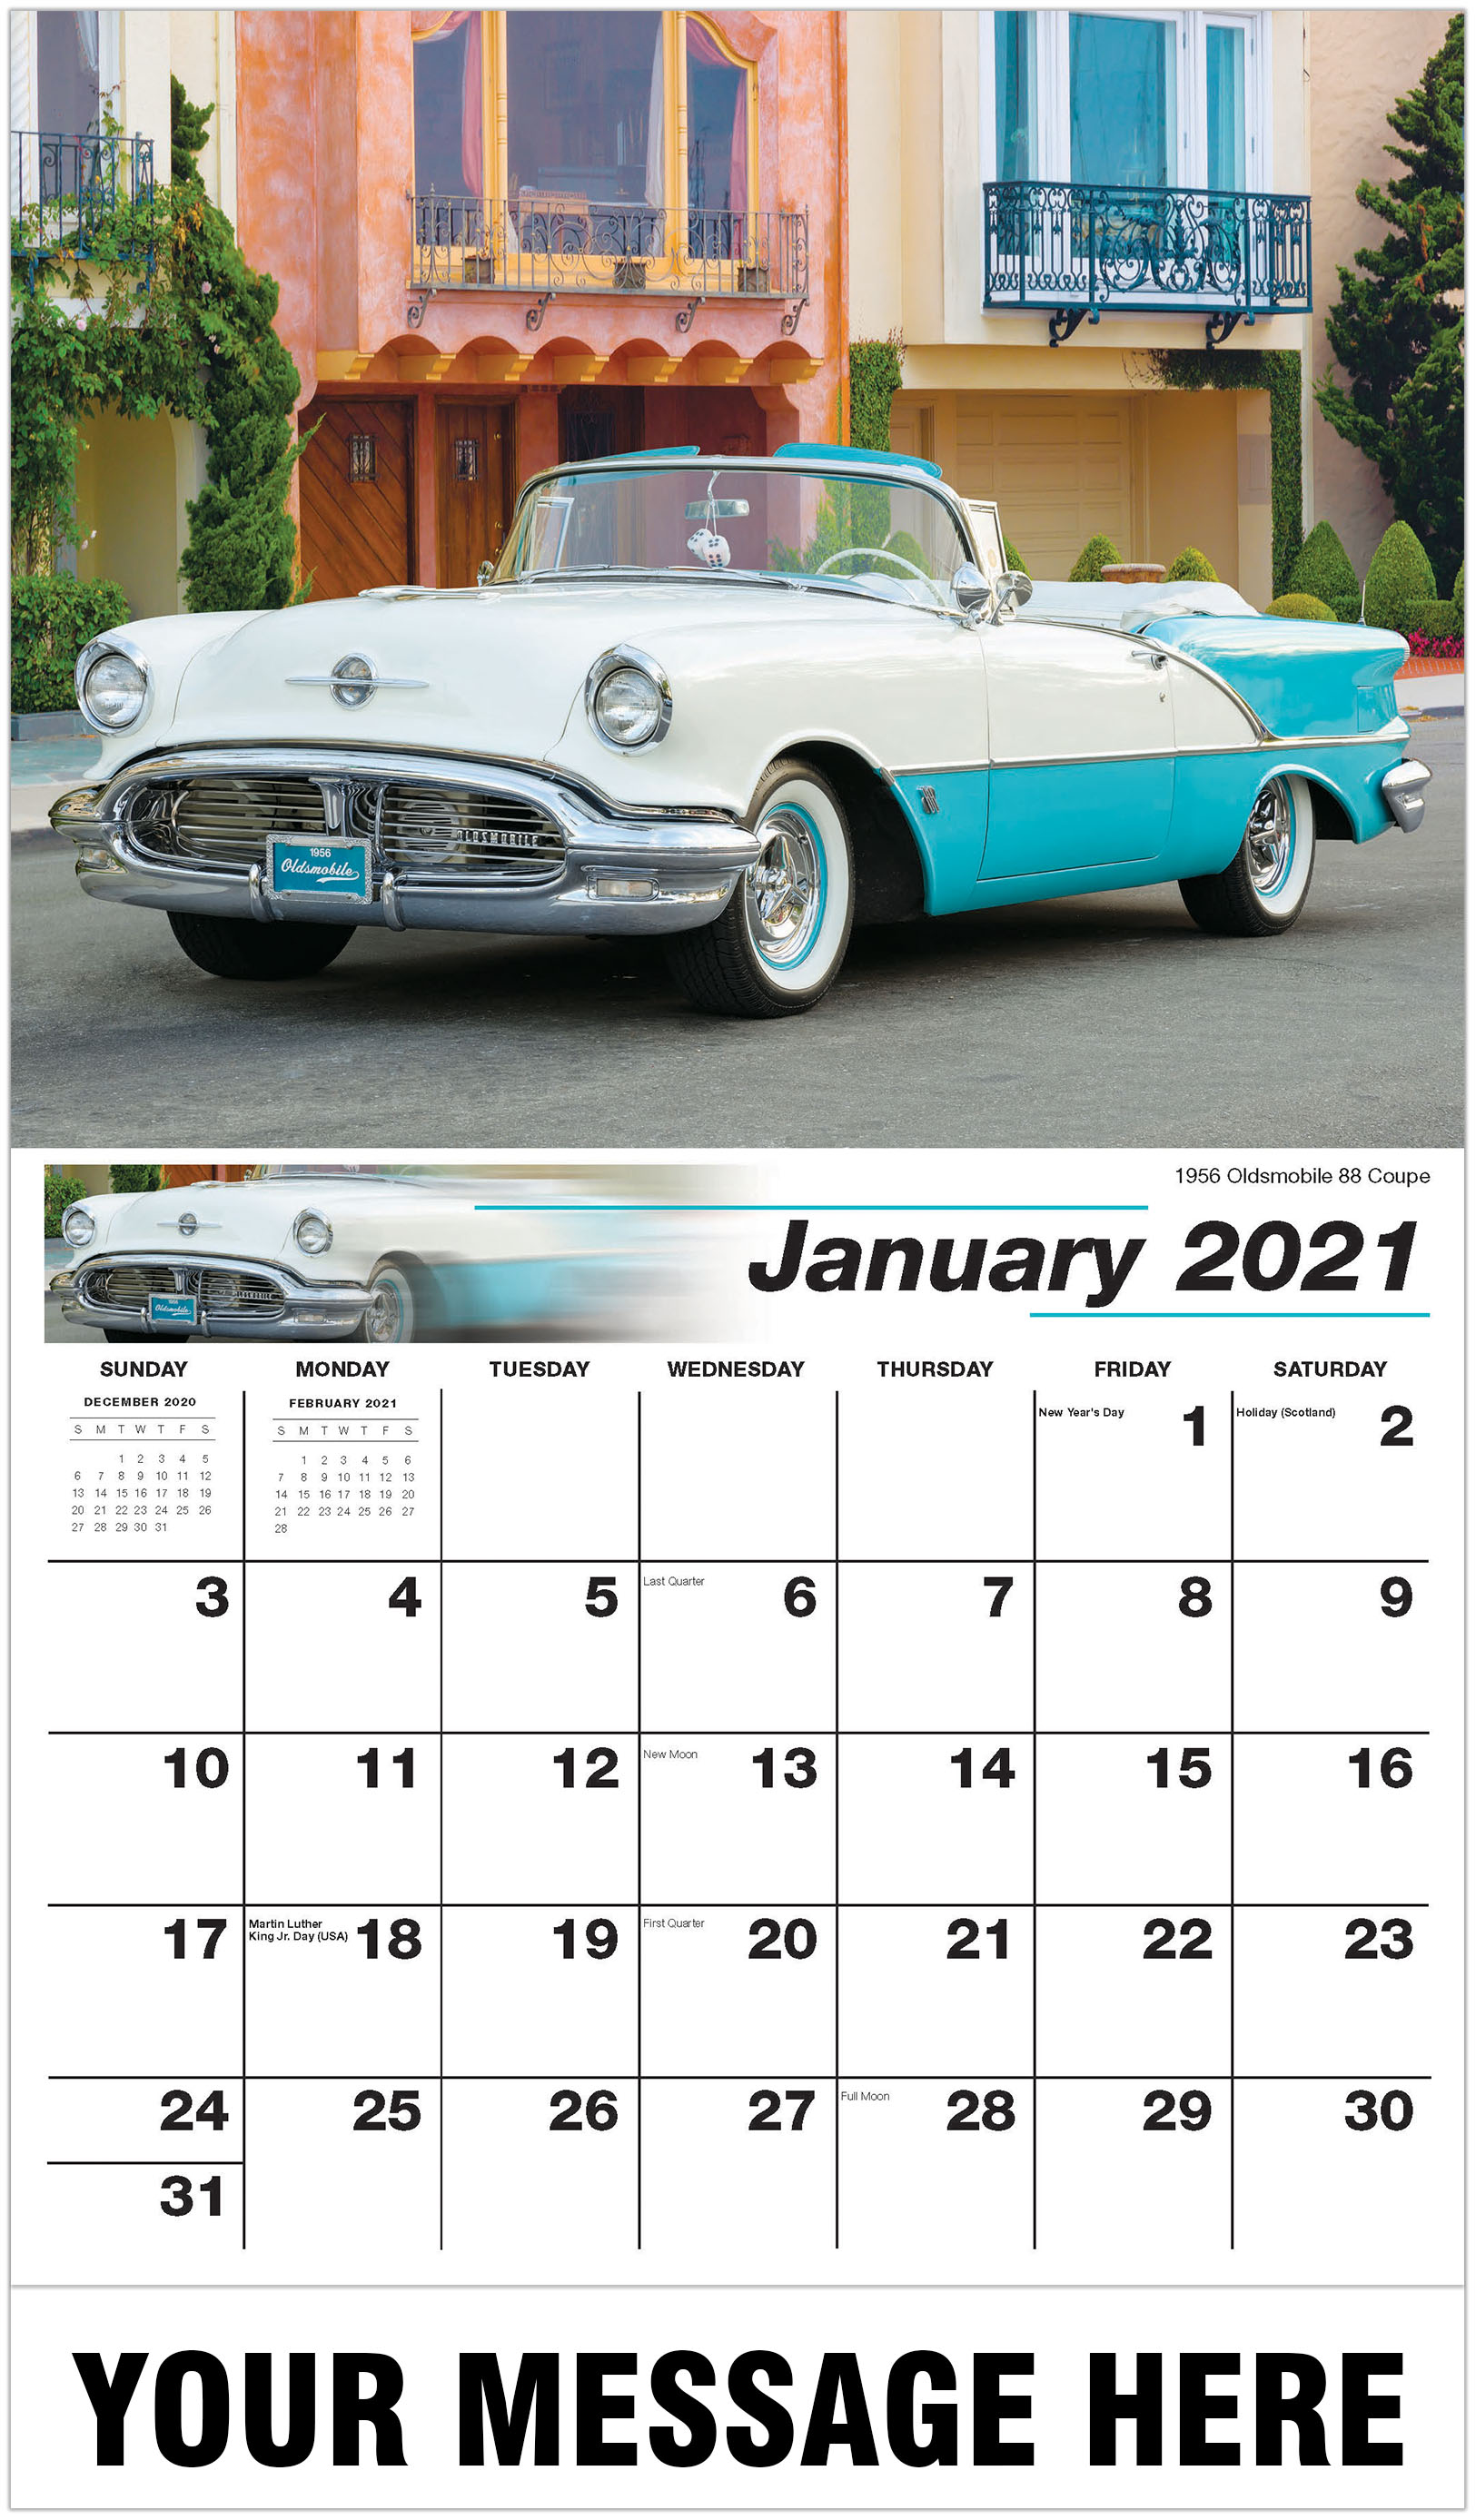 GM Classic Cars Calendar 2021 Promotional Calendar Vintage Car Calendar